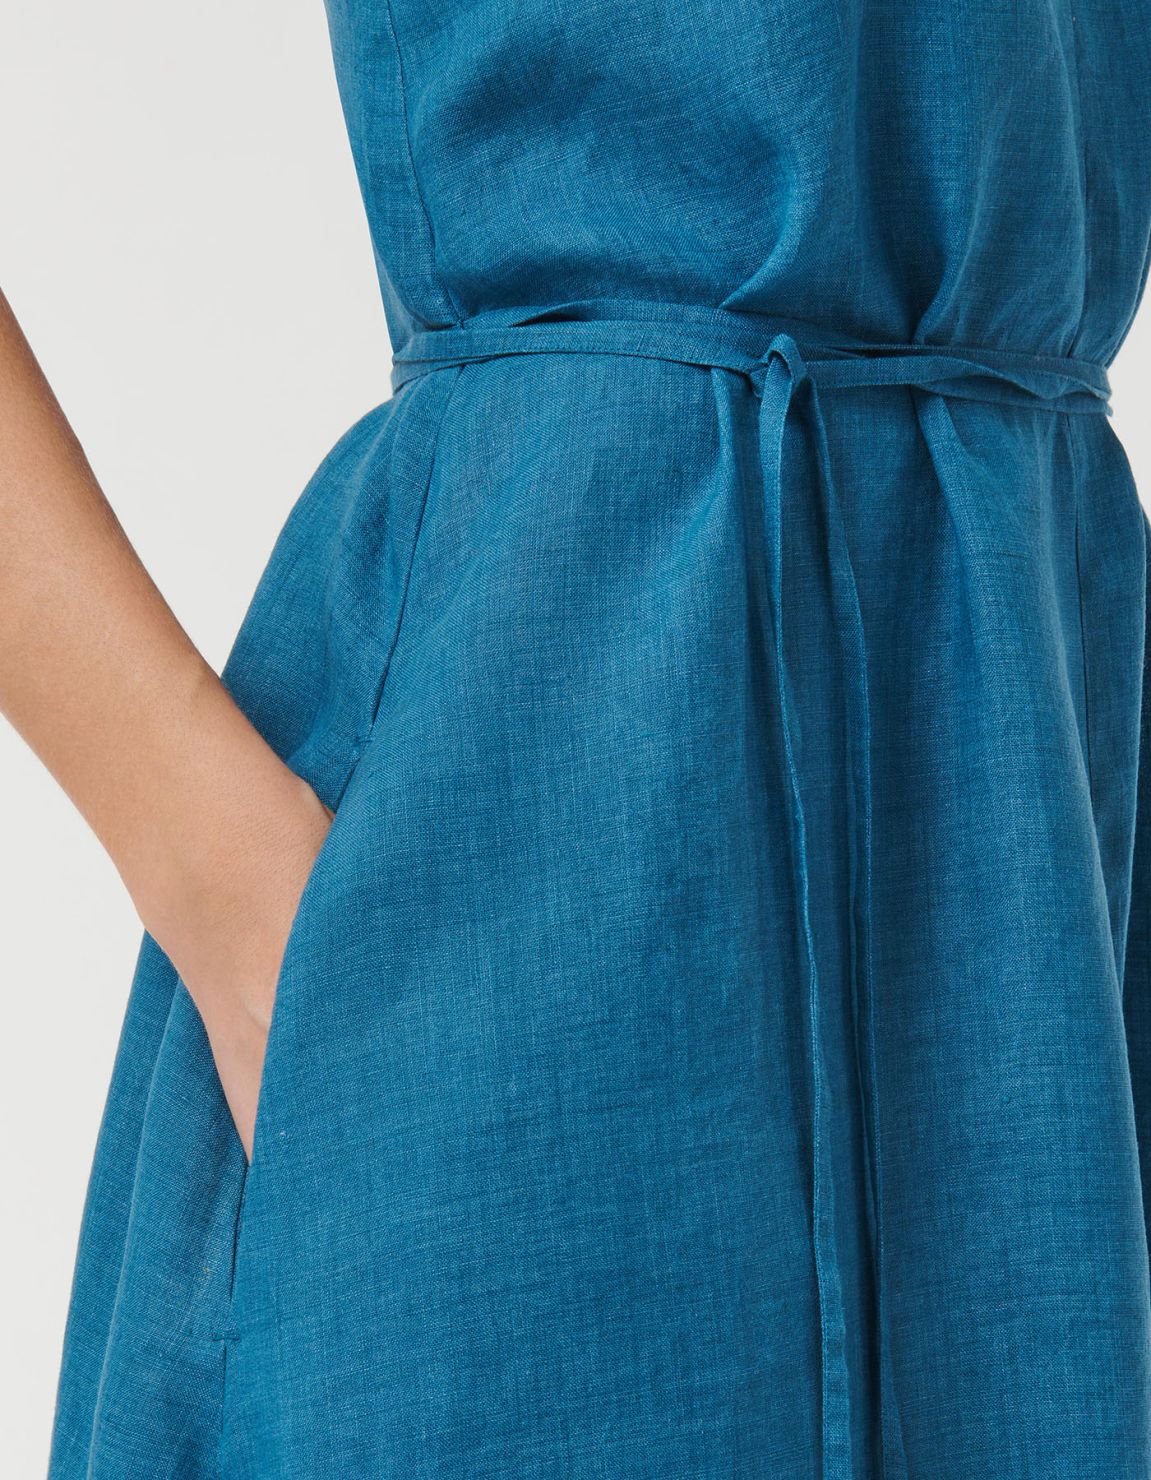 Kleid Pfauenblau Leinen Uni One Size 4